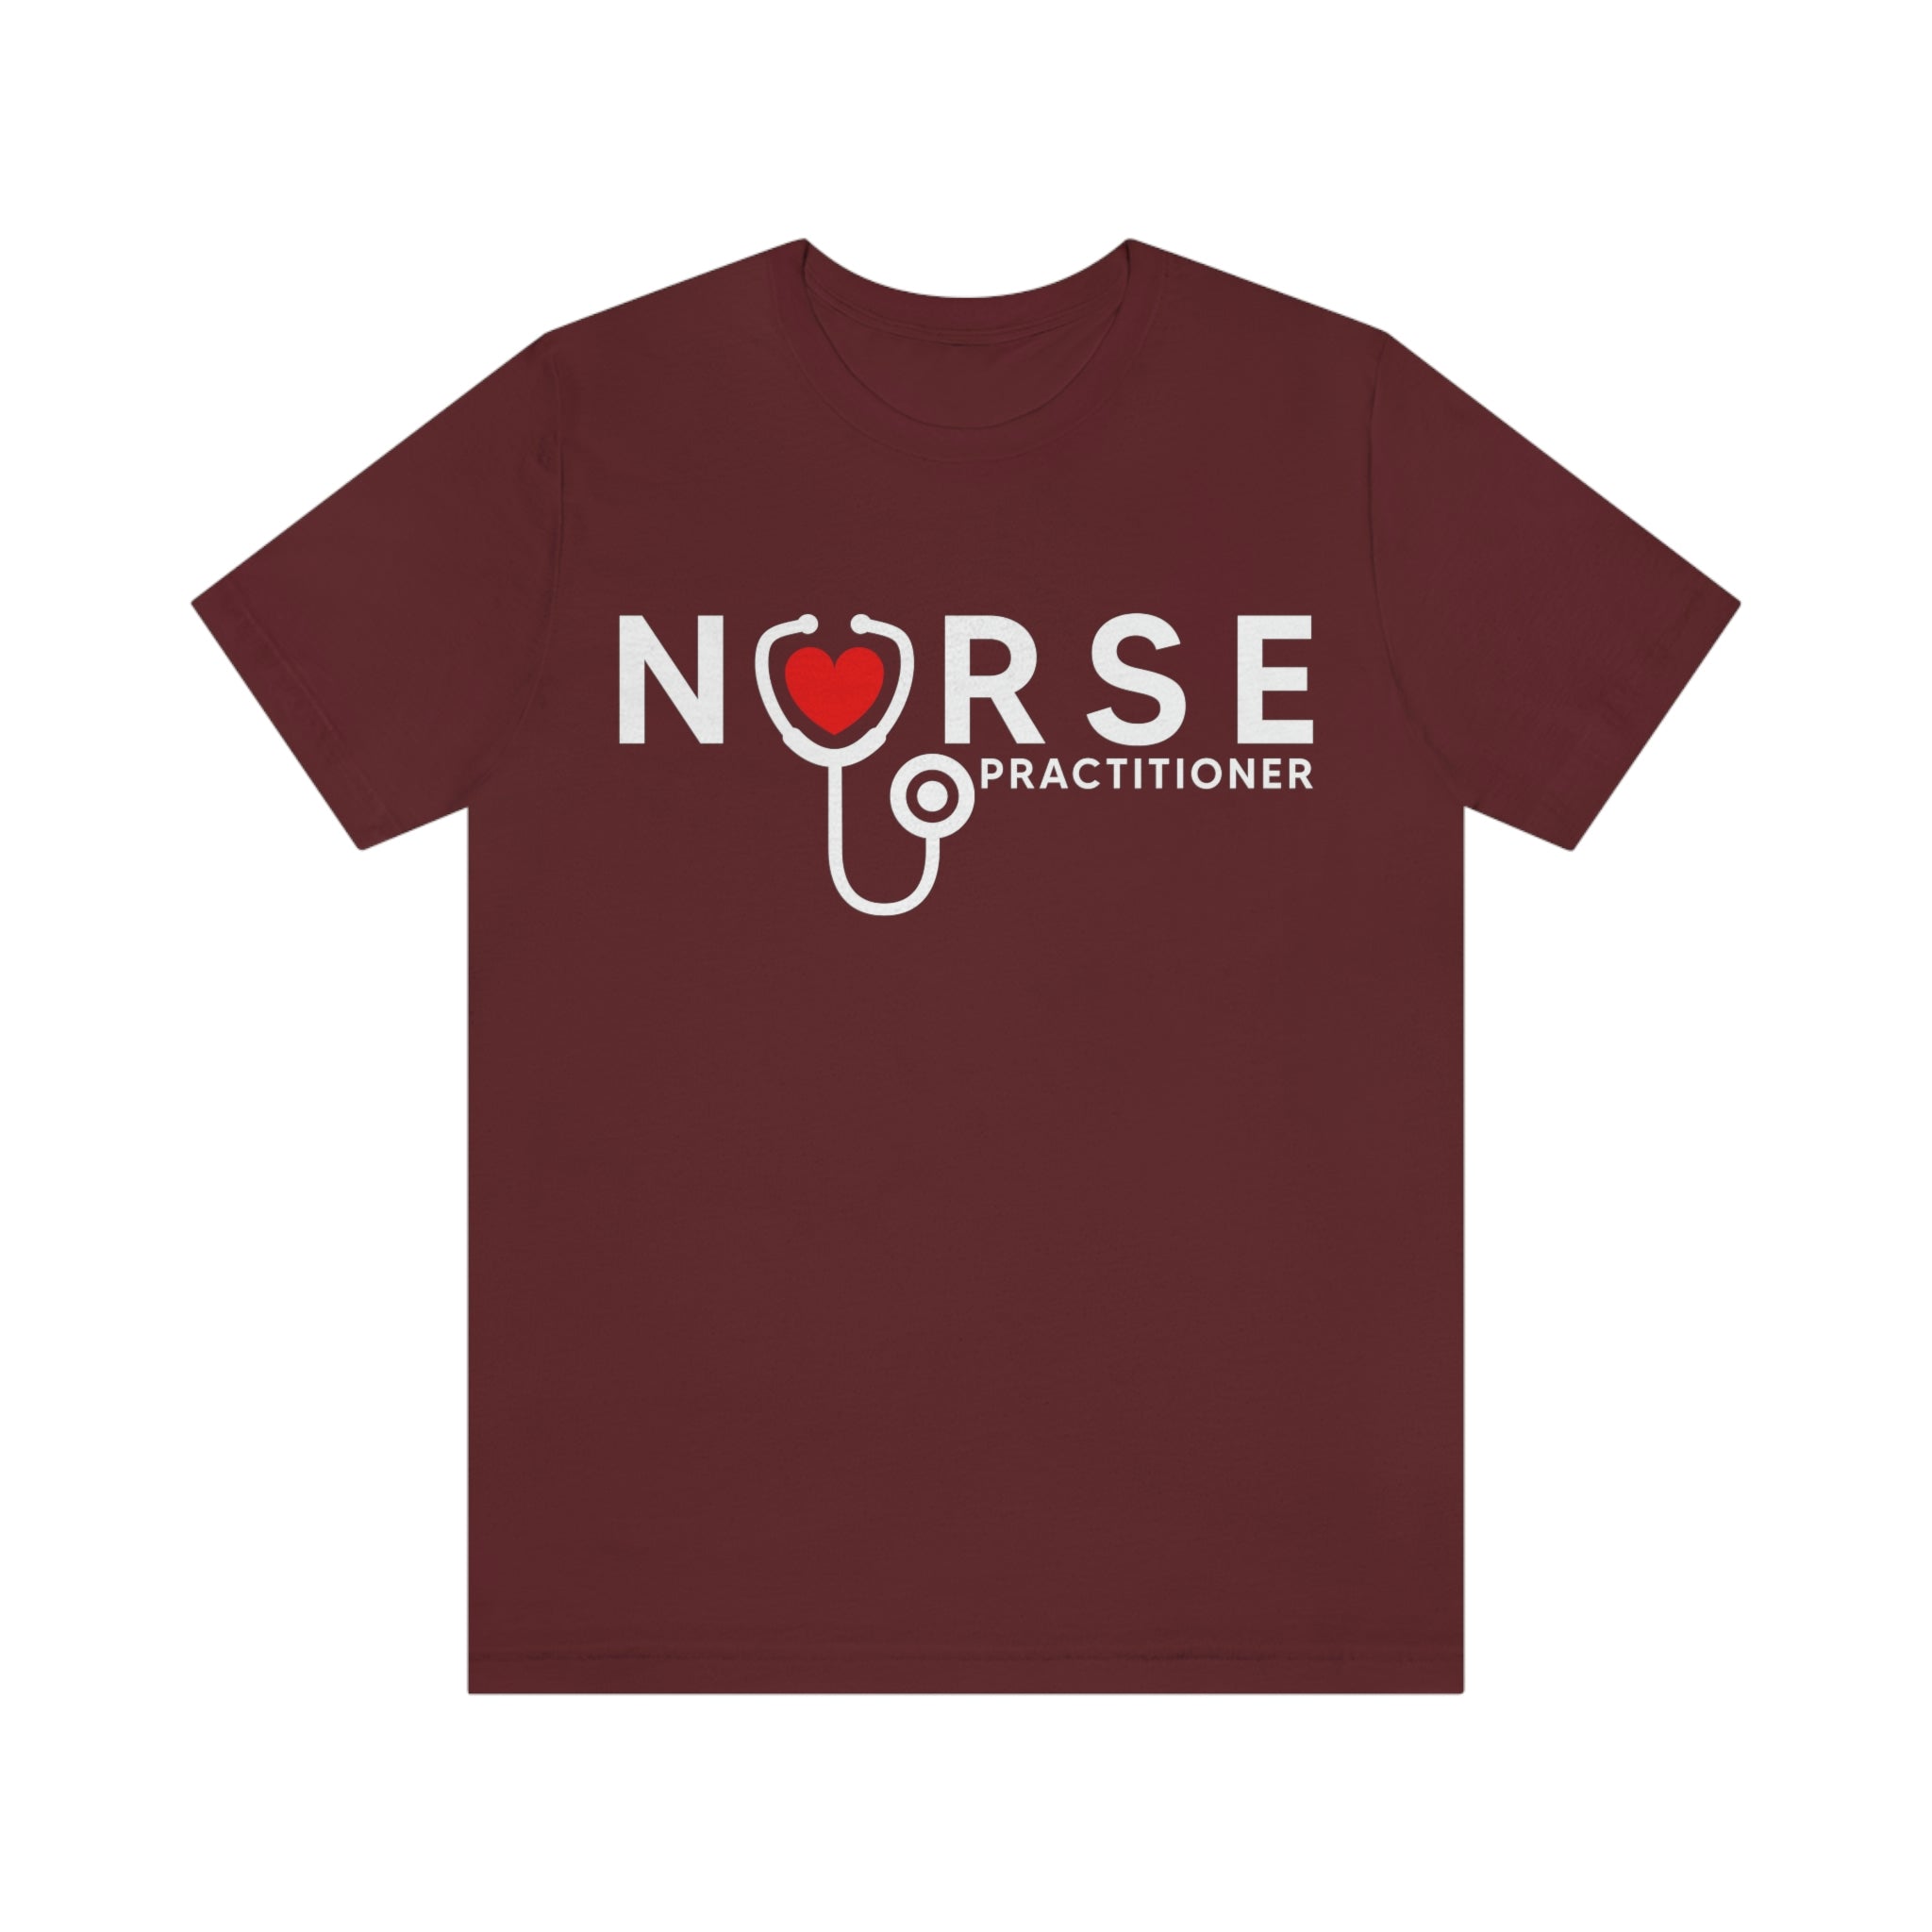 Nurse Practitioner (T-Shirt)